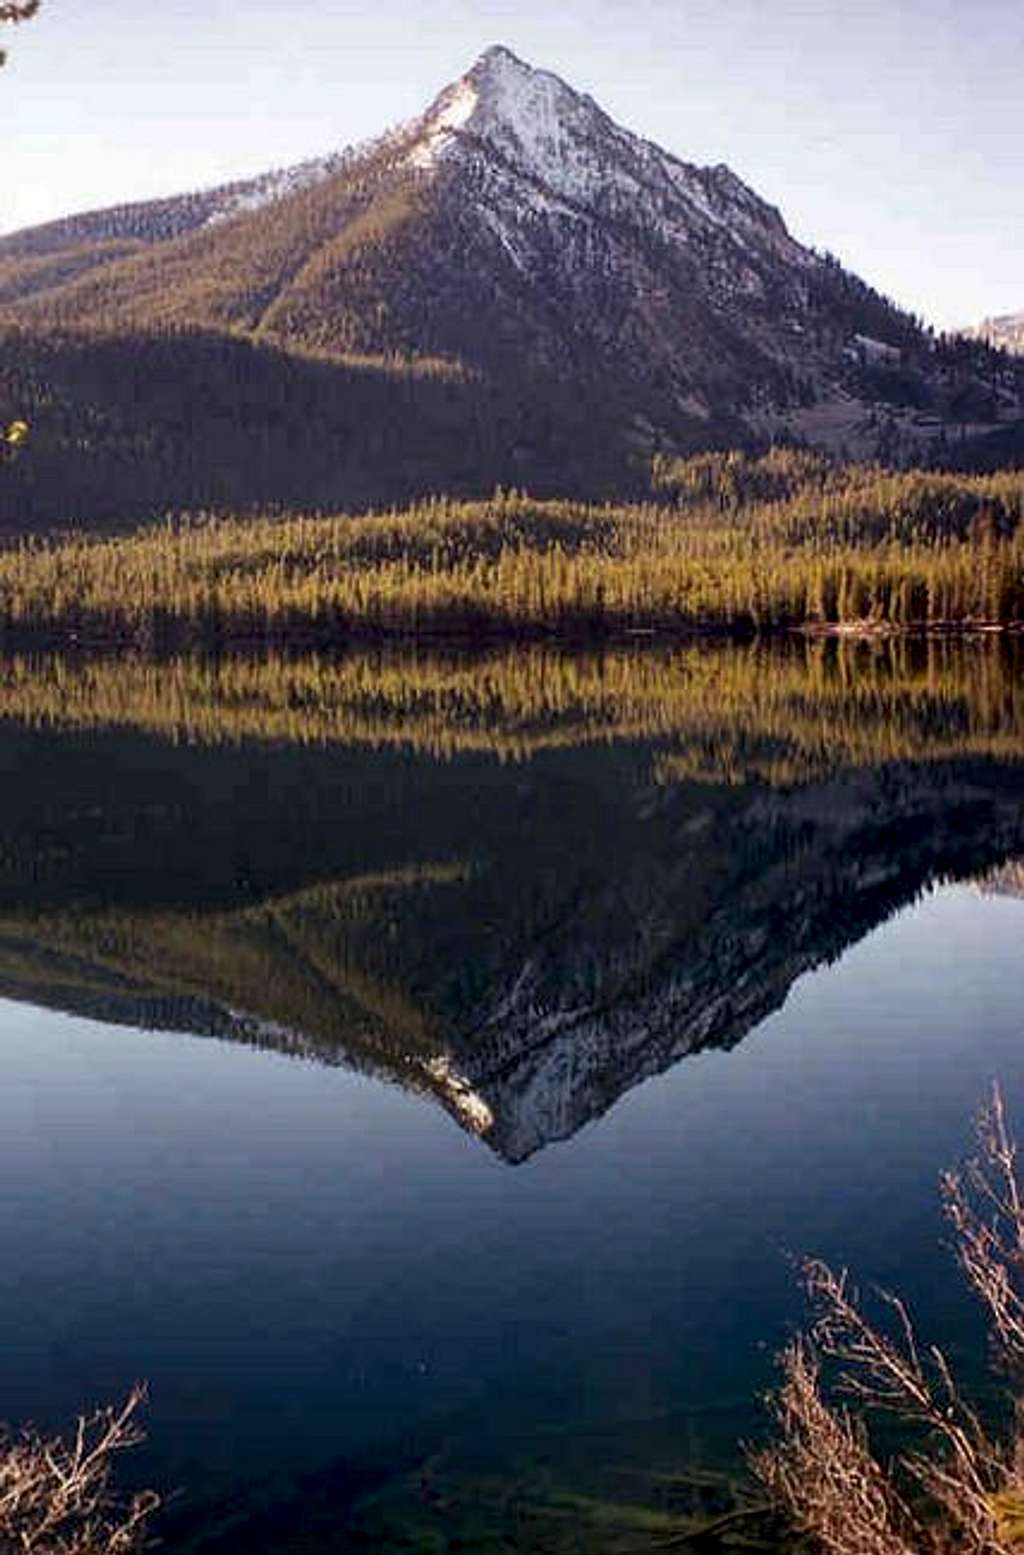 Pettit Lake